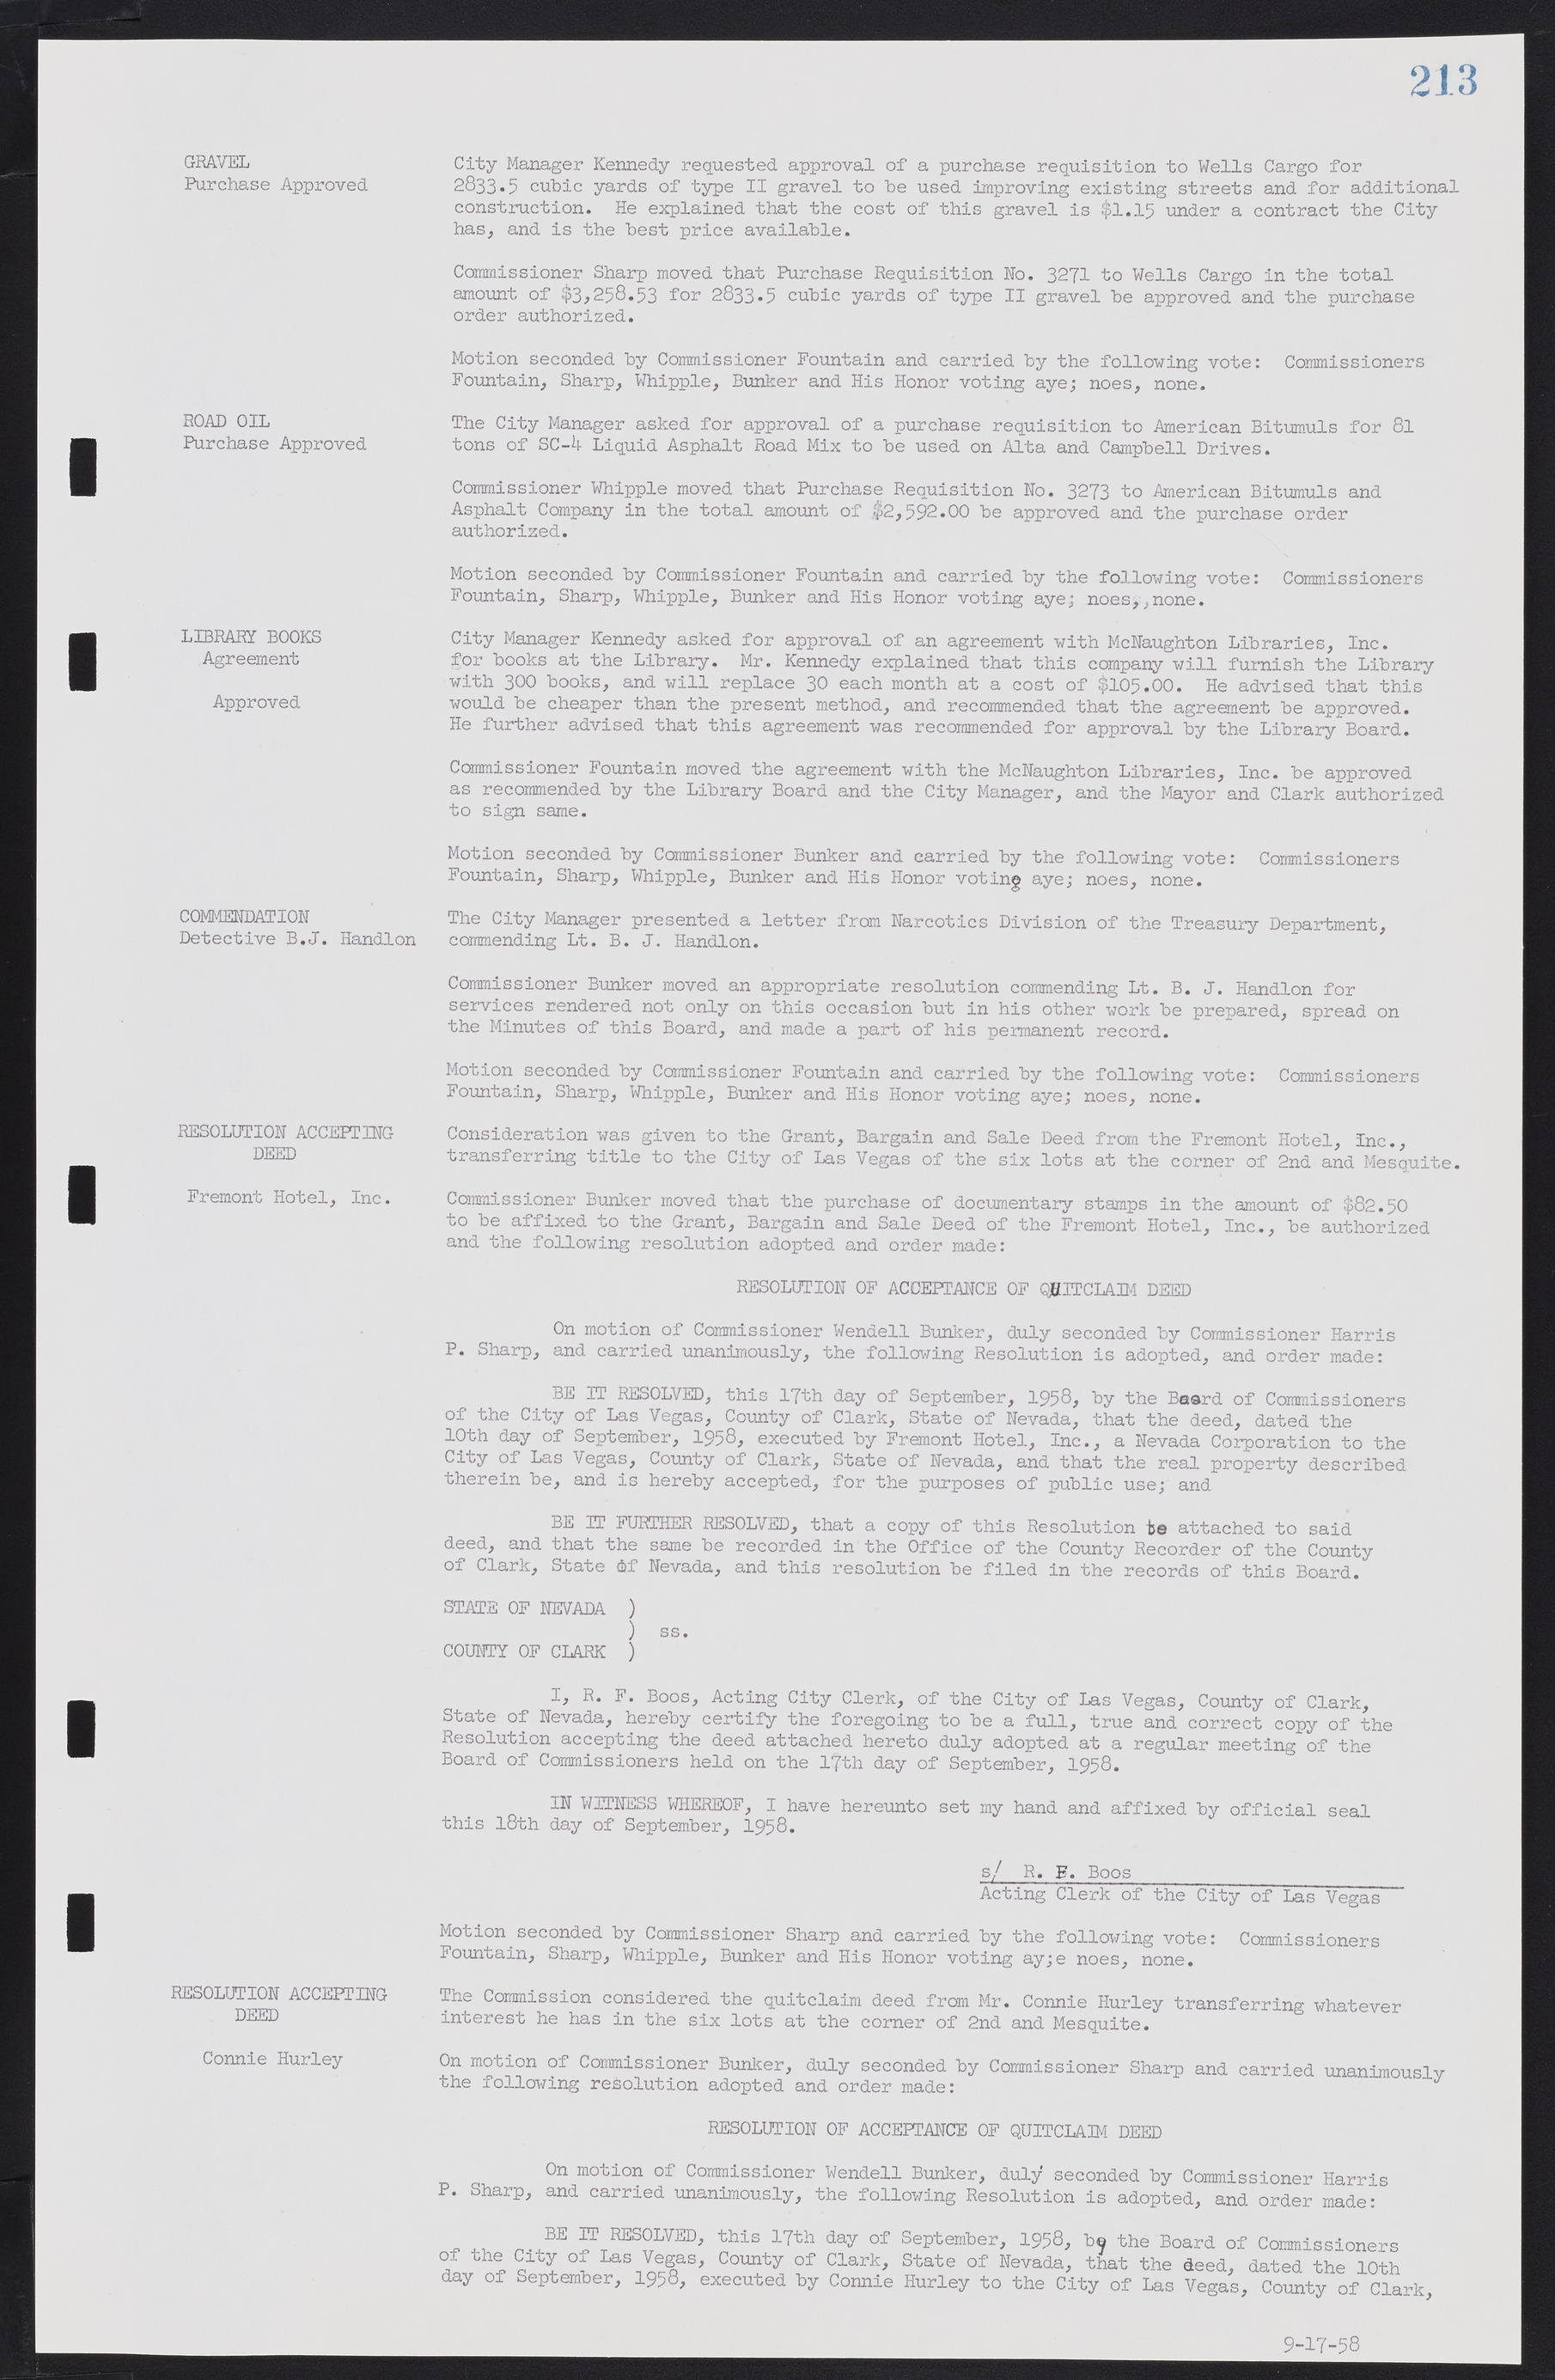 Las Vegas City Commission Minutes, November 20, 1957 to December 2, 1959, lvc000011-217